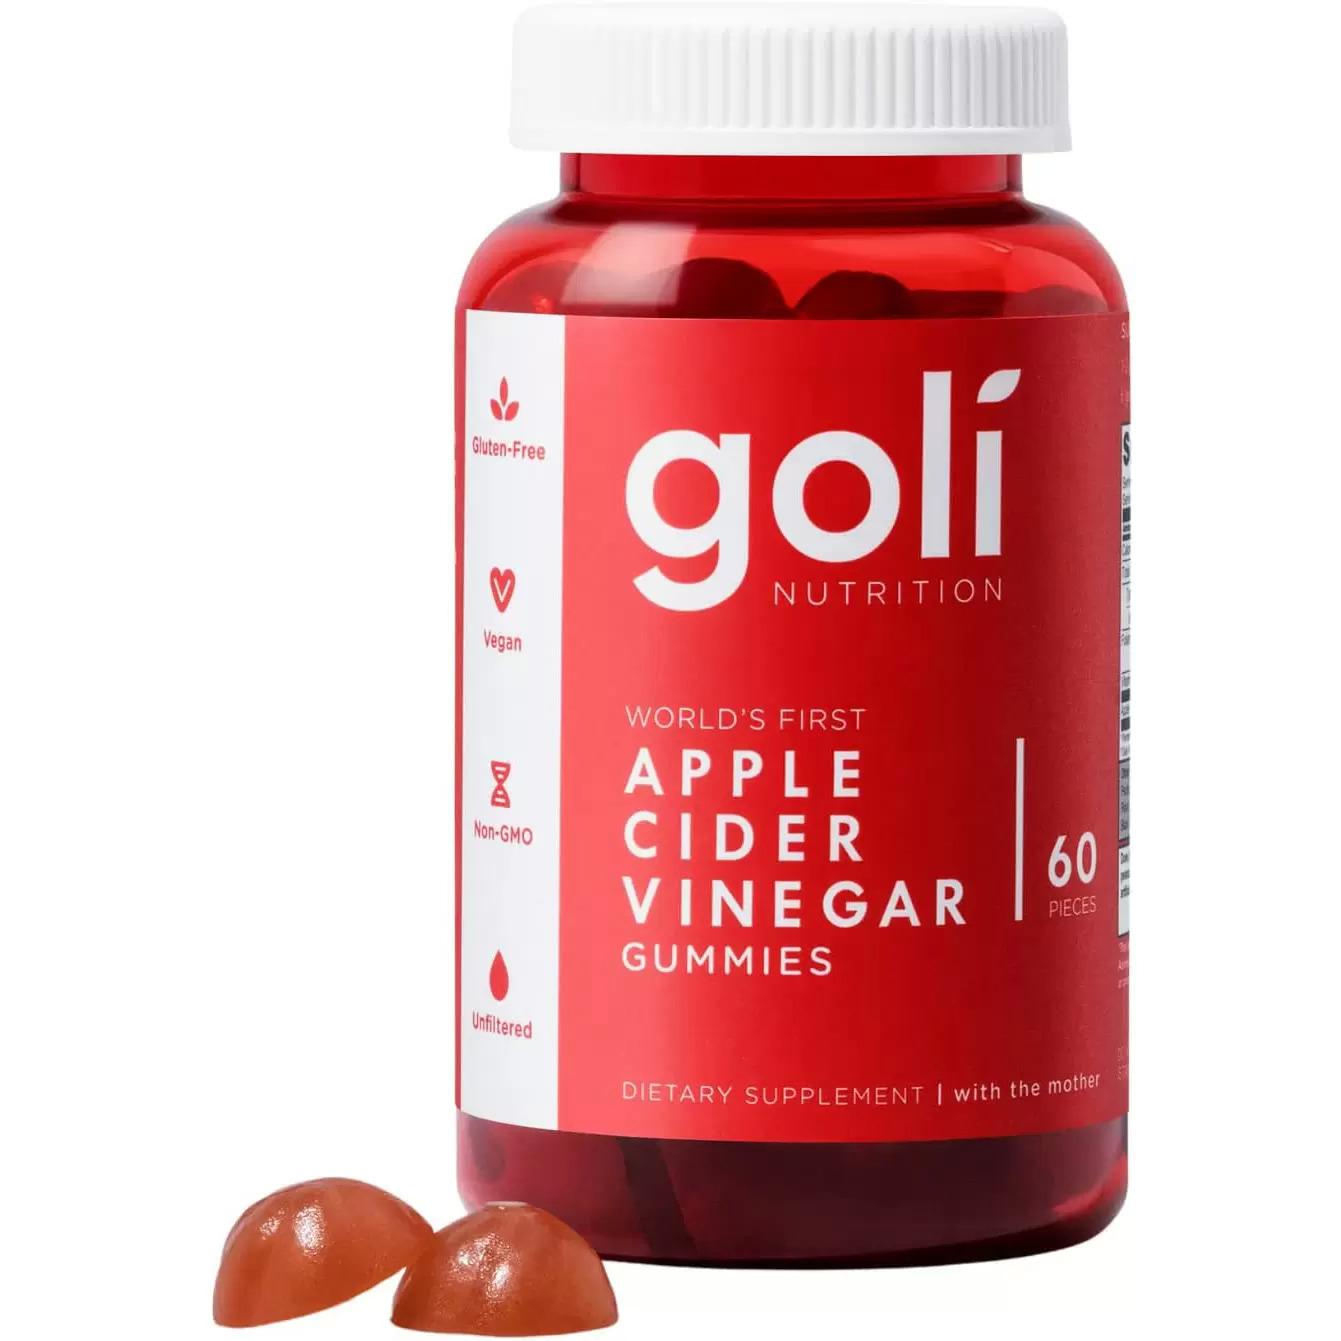 Apple Cider Vinegar Gummy Vitamins by Goli Nutrition for $11.96 Shipped